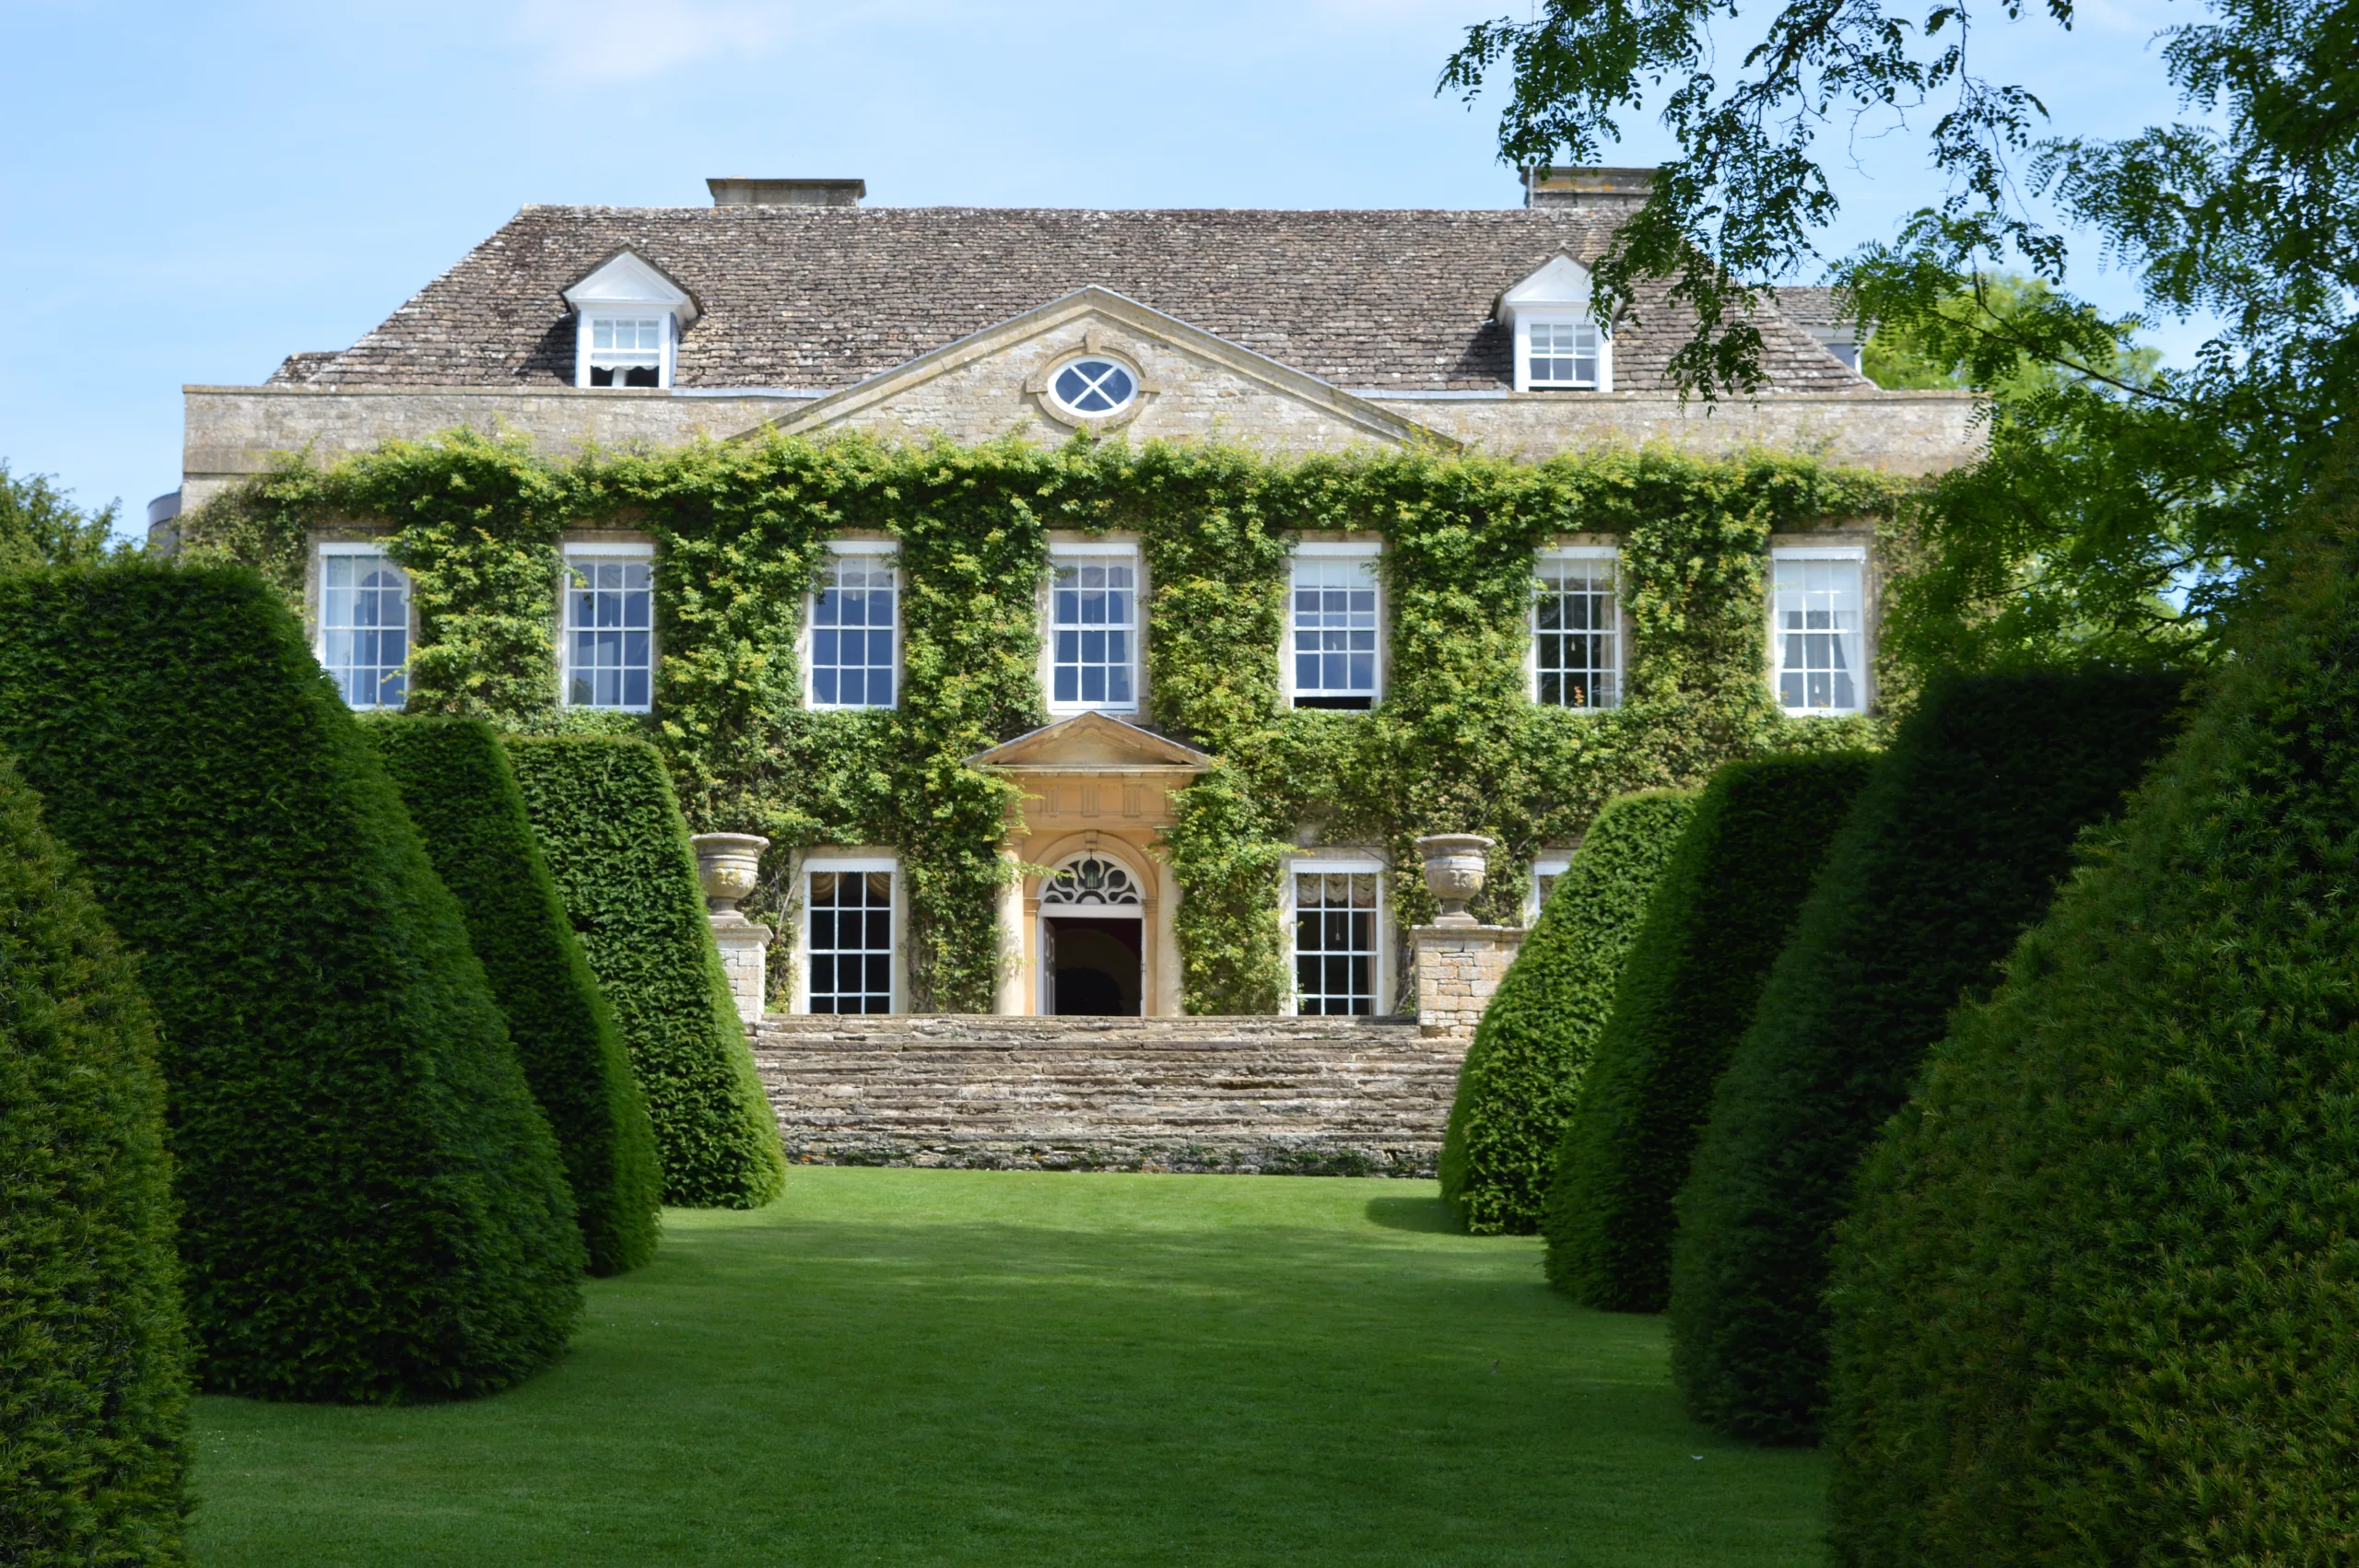 Cornwell Manor